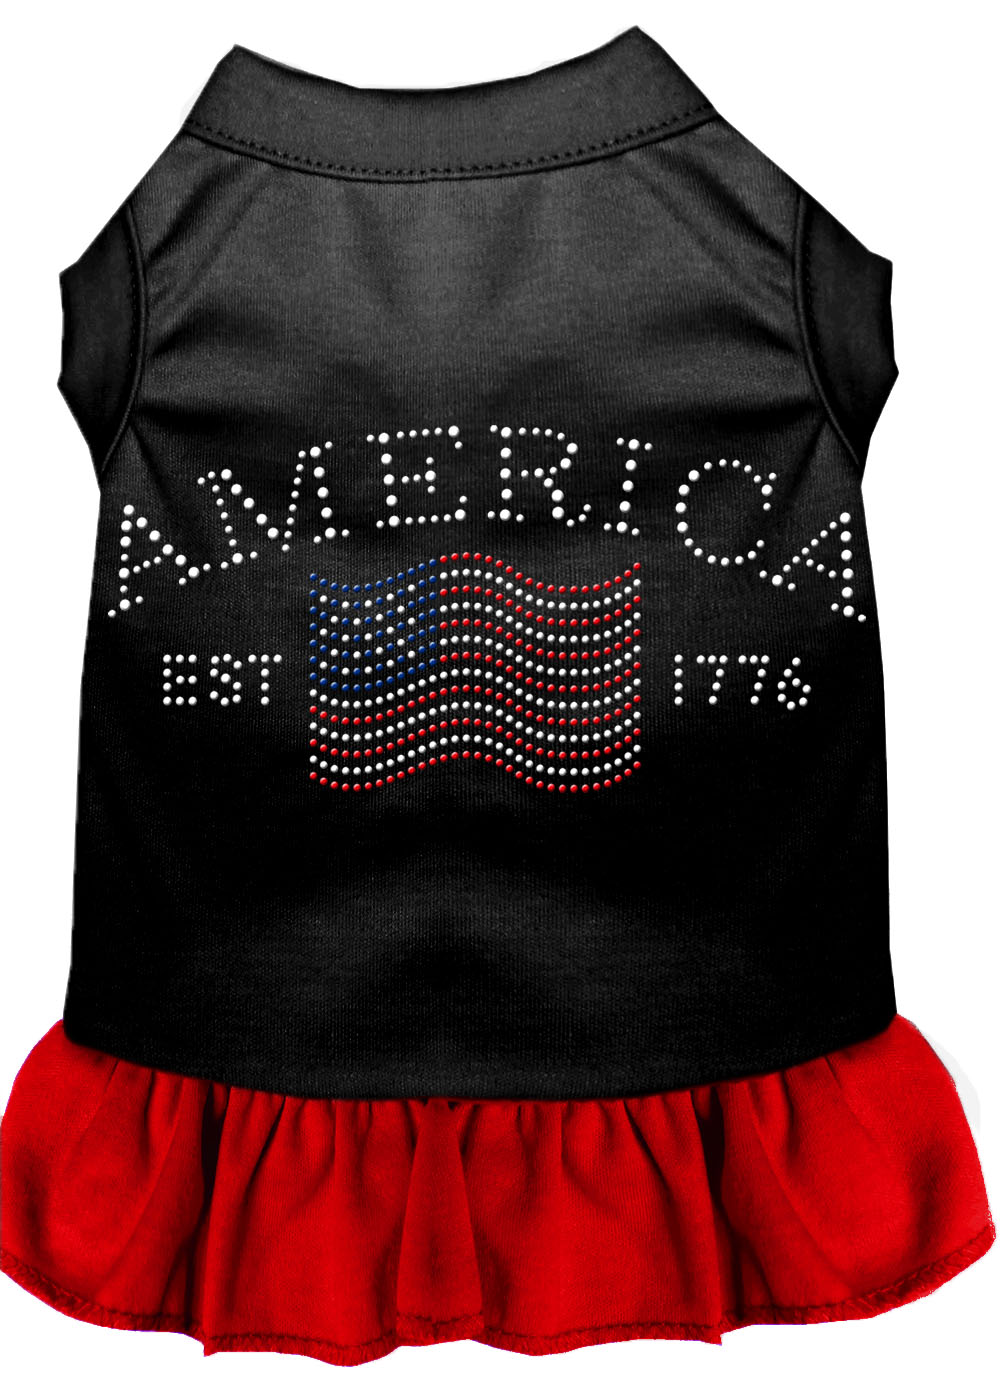 Classic America Rhinestone Dress Black with Red XXL